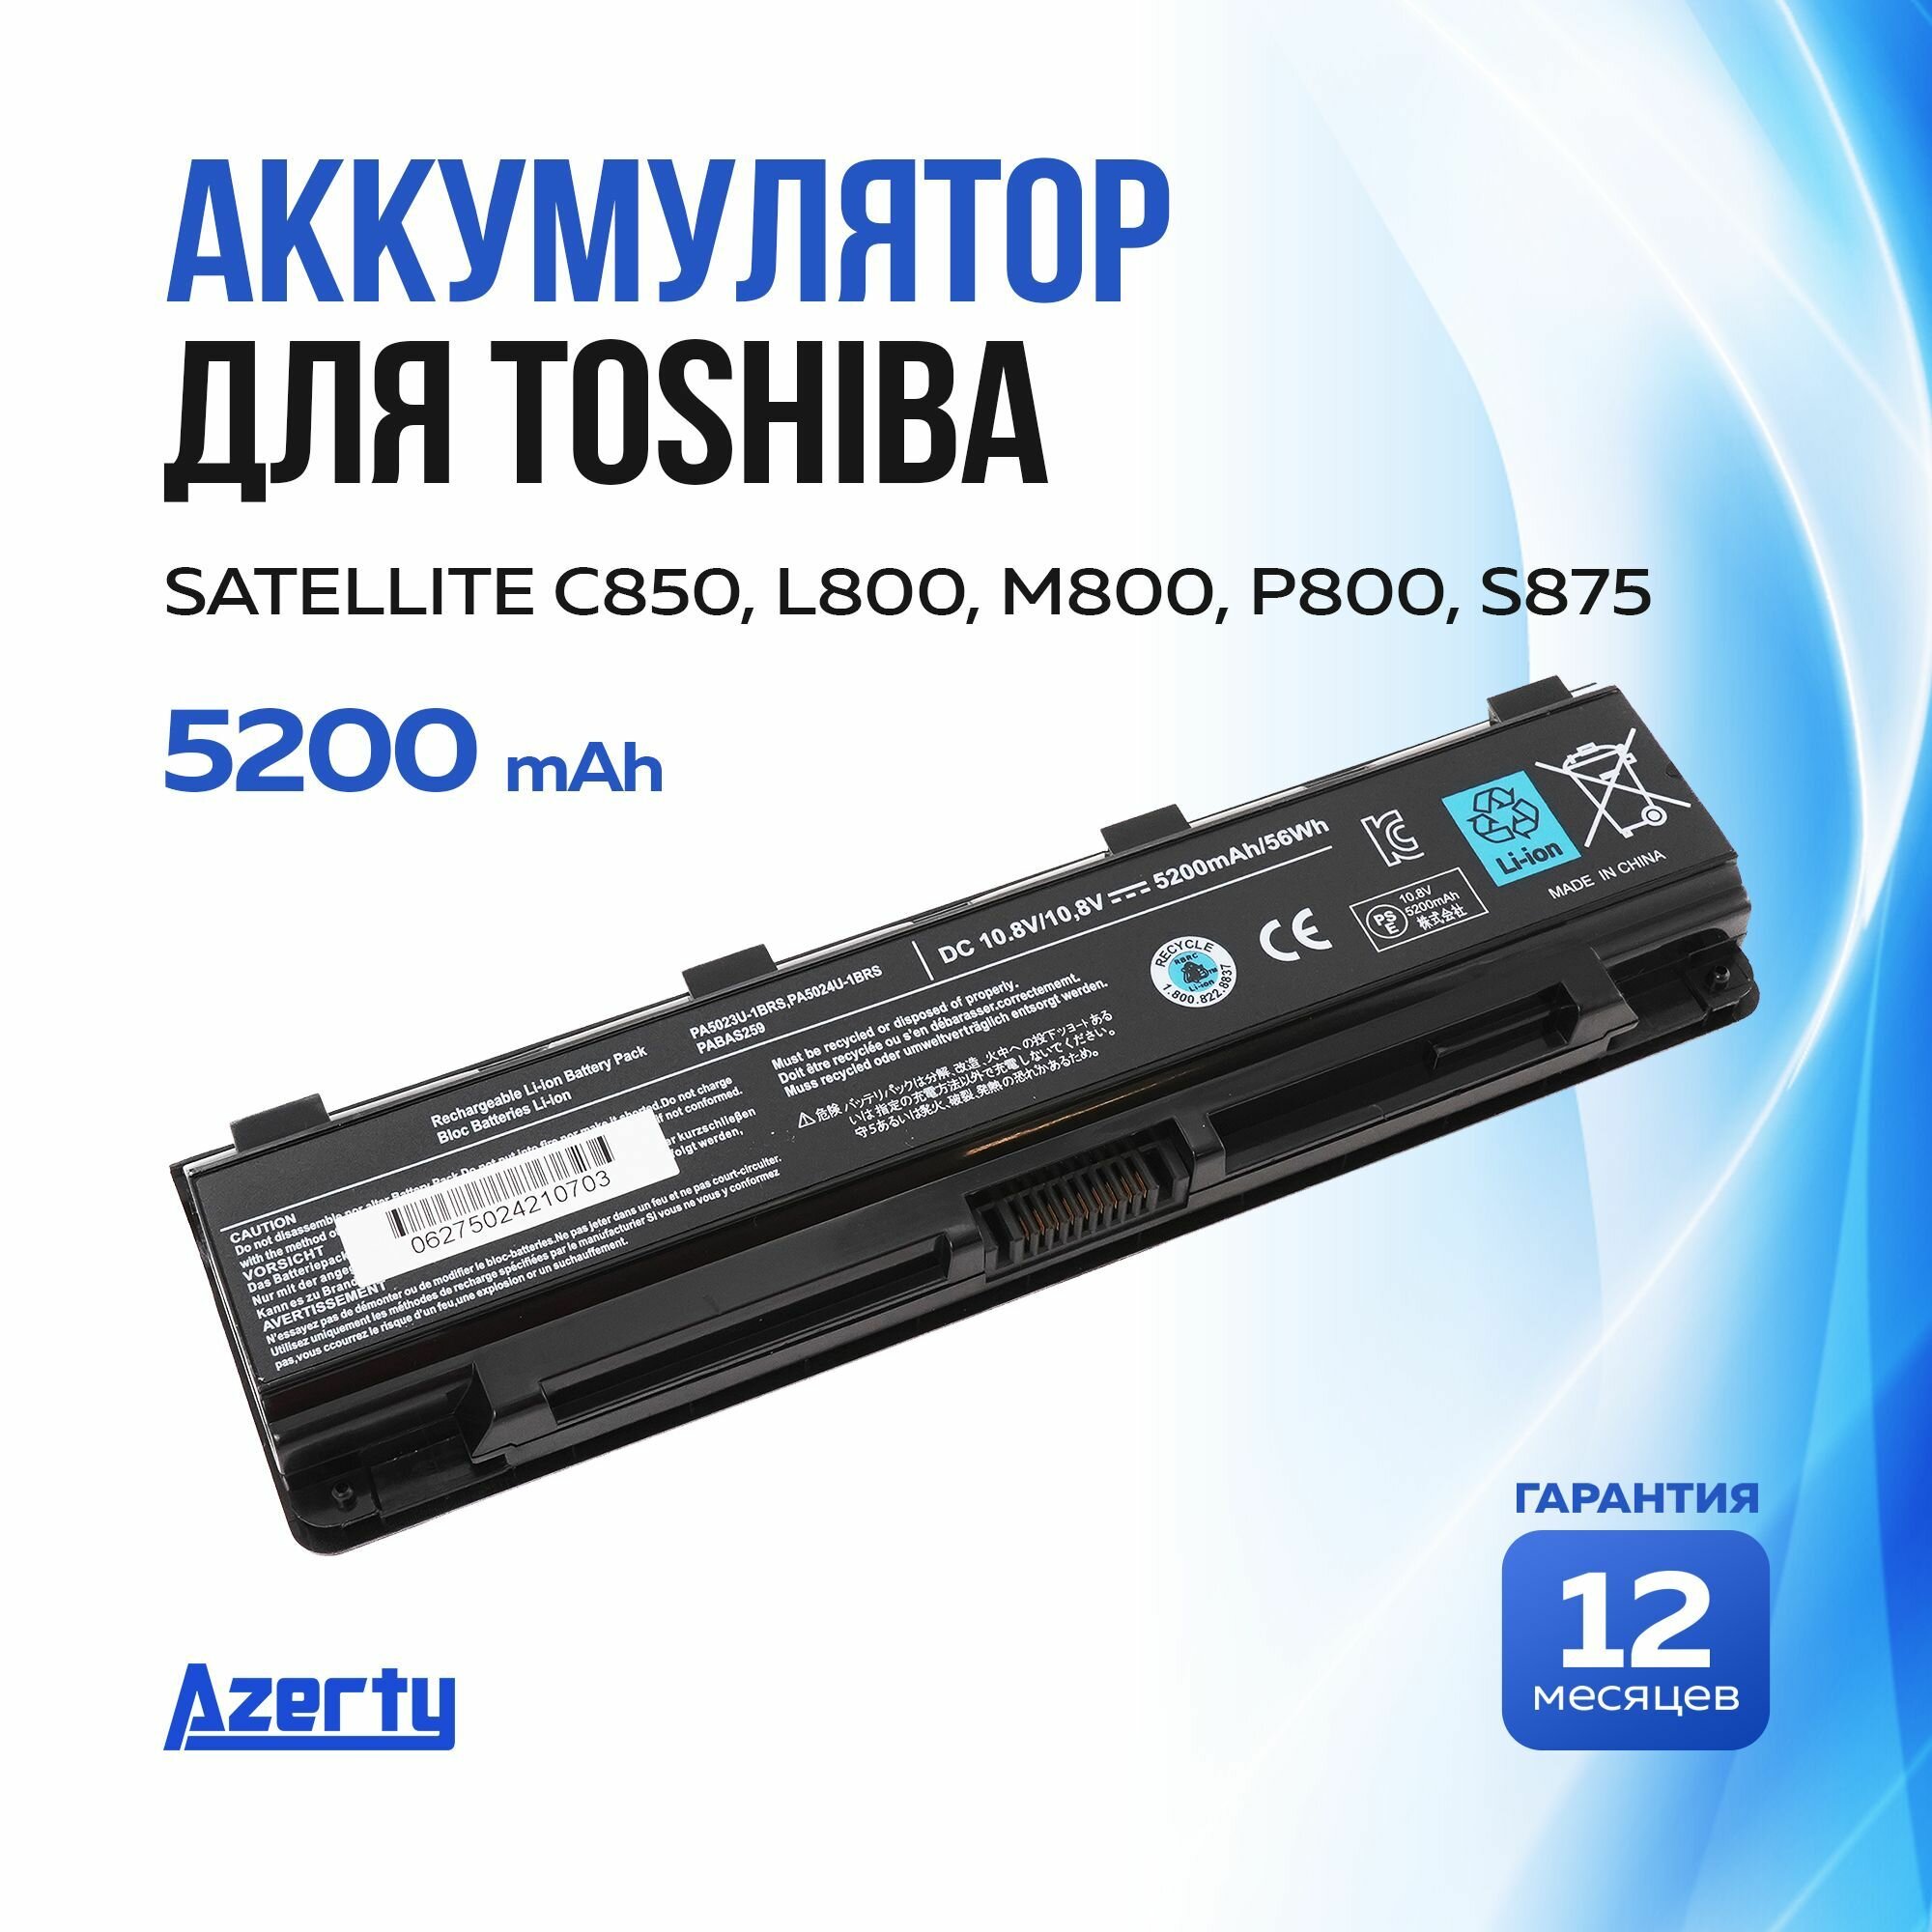 Аккумулятор PA5024U для Toshiba Satellite C850 / L800 / M800 / P800 / S875 (PABAS260, PABAS261)